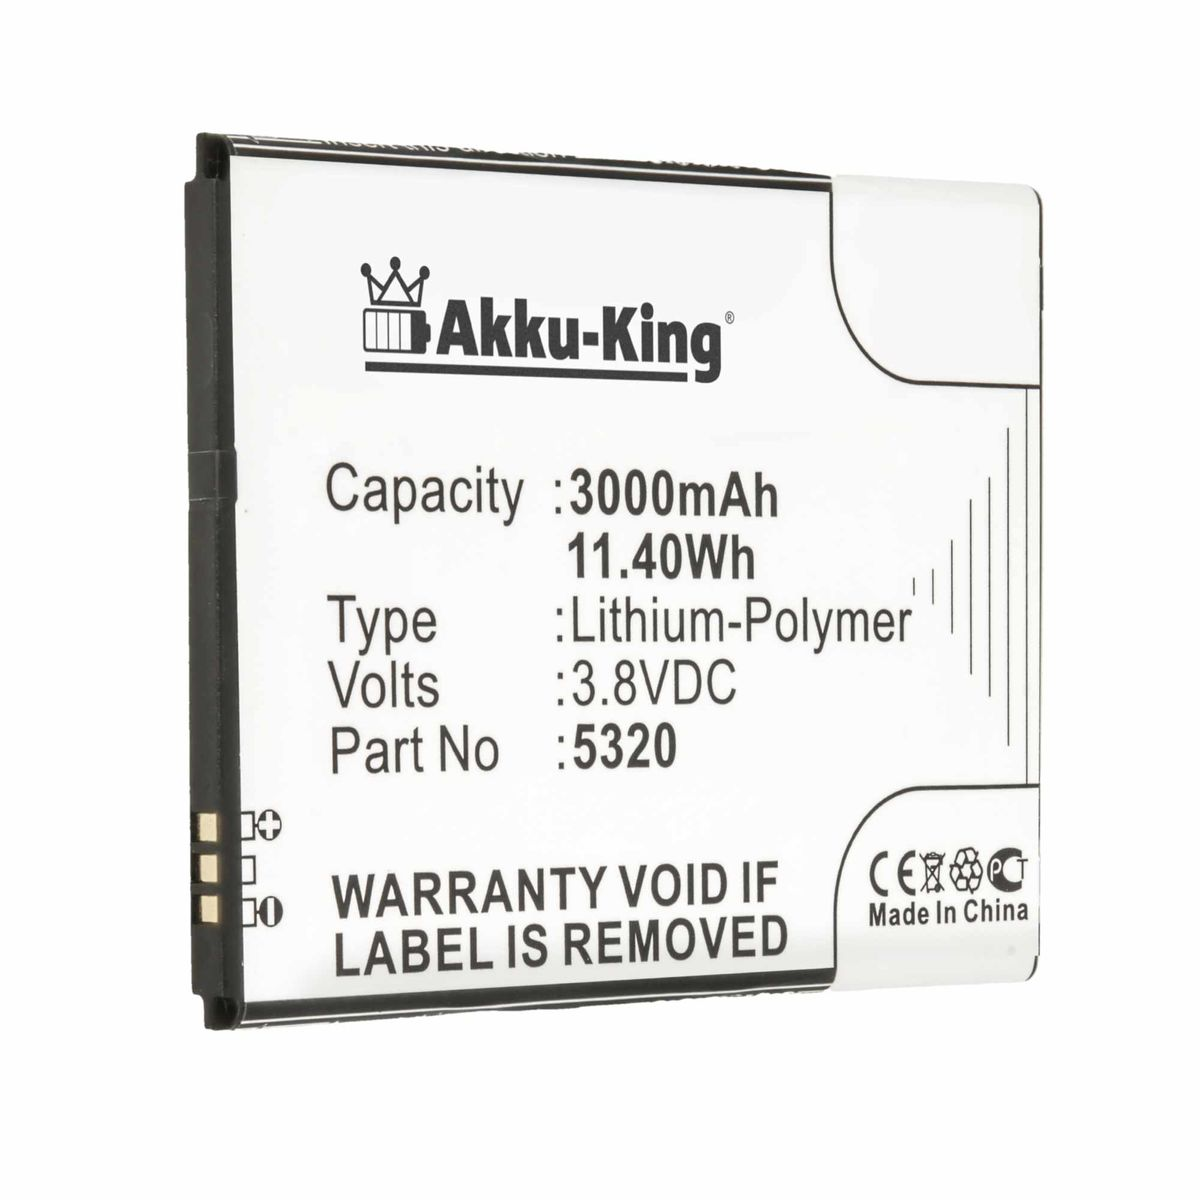 Volt, 5320 kompatibel Wiko 3000mAh AKKU-KING Akku mit Handy-Akku, Li-Polymer 3.8